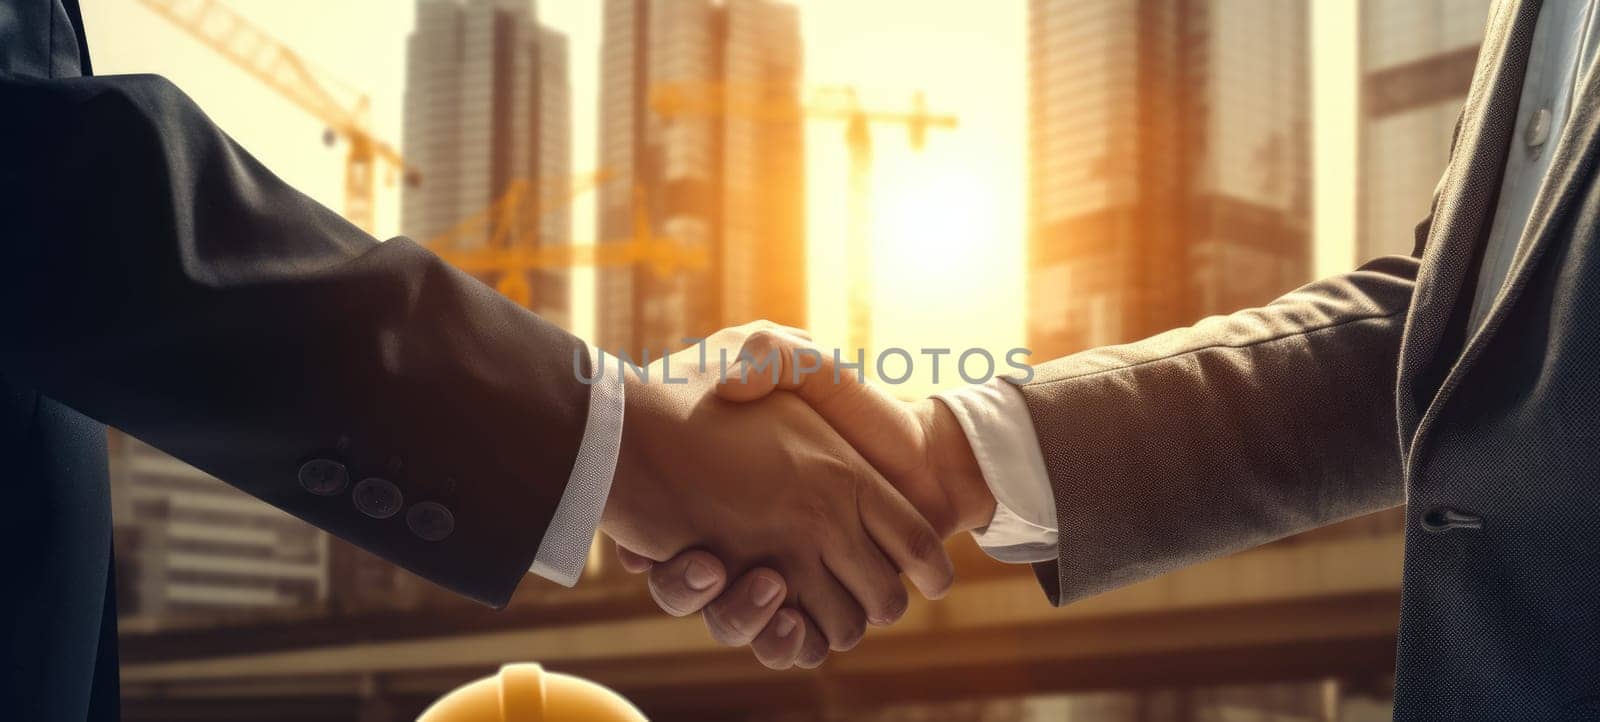 business construction agreement business hand shakes, ai by rachellaiyl